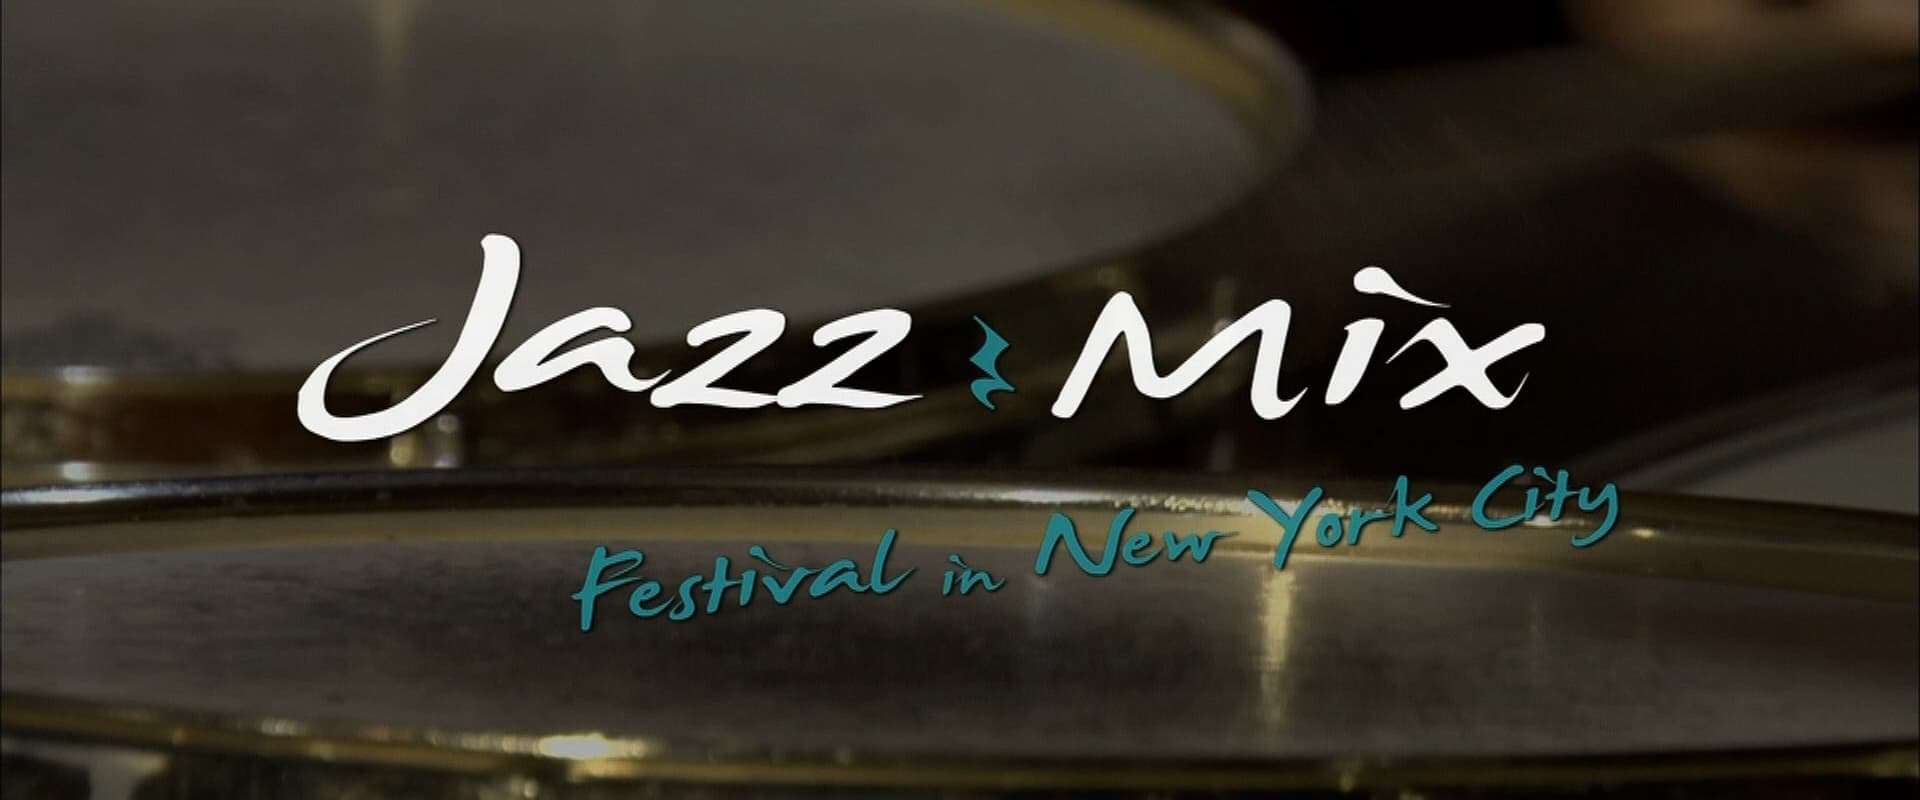 Jazzmix - 8 Jazz Concerts - 8 Films Live in NYC